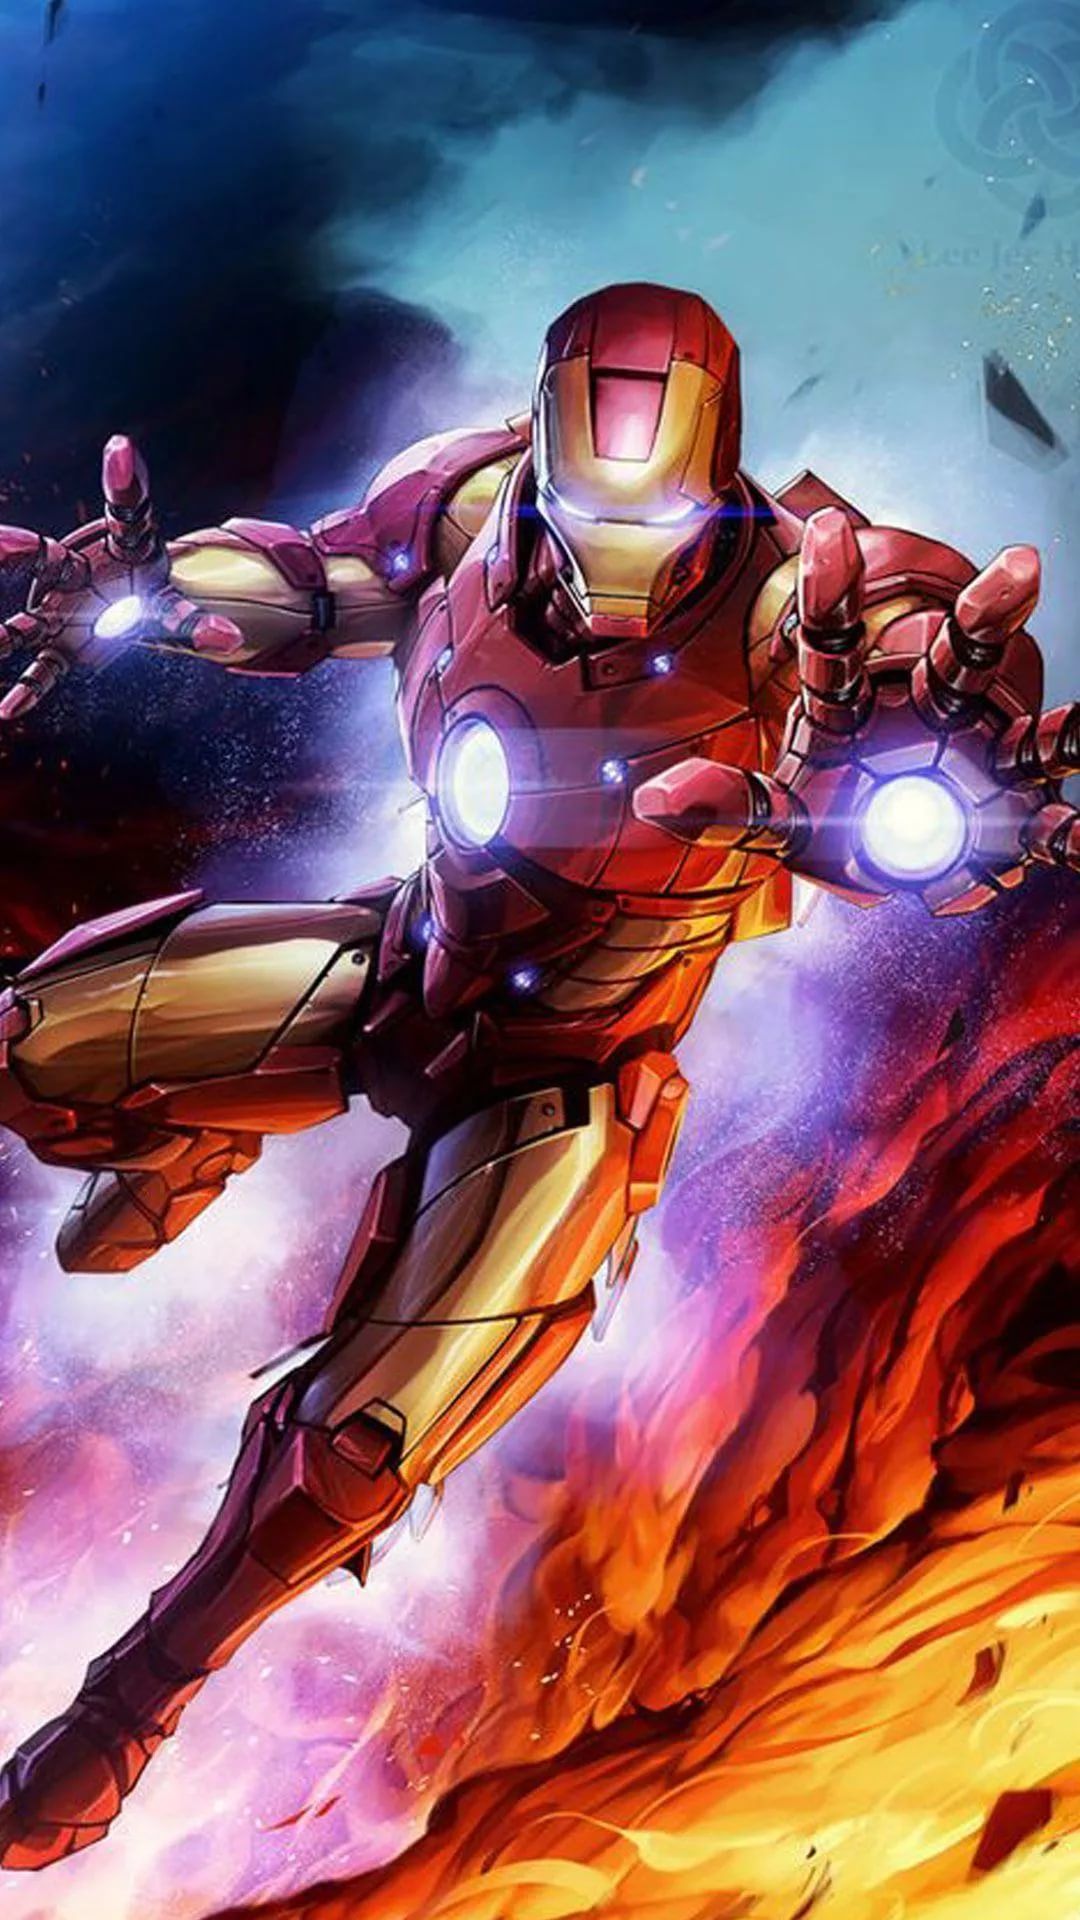 Iron Man D HD wallpaper for iPhone 6 1080p